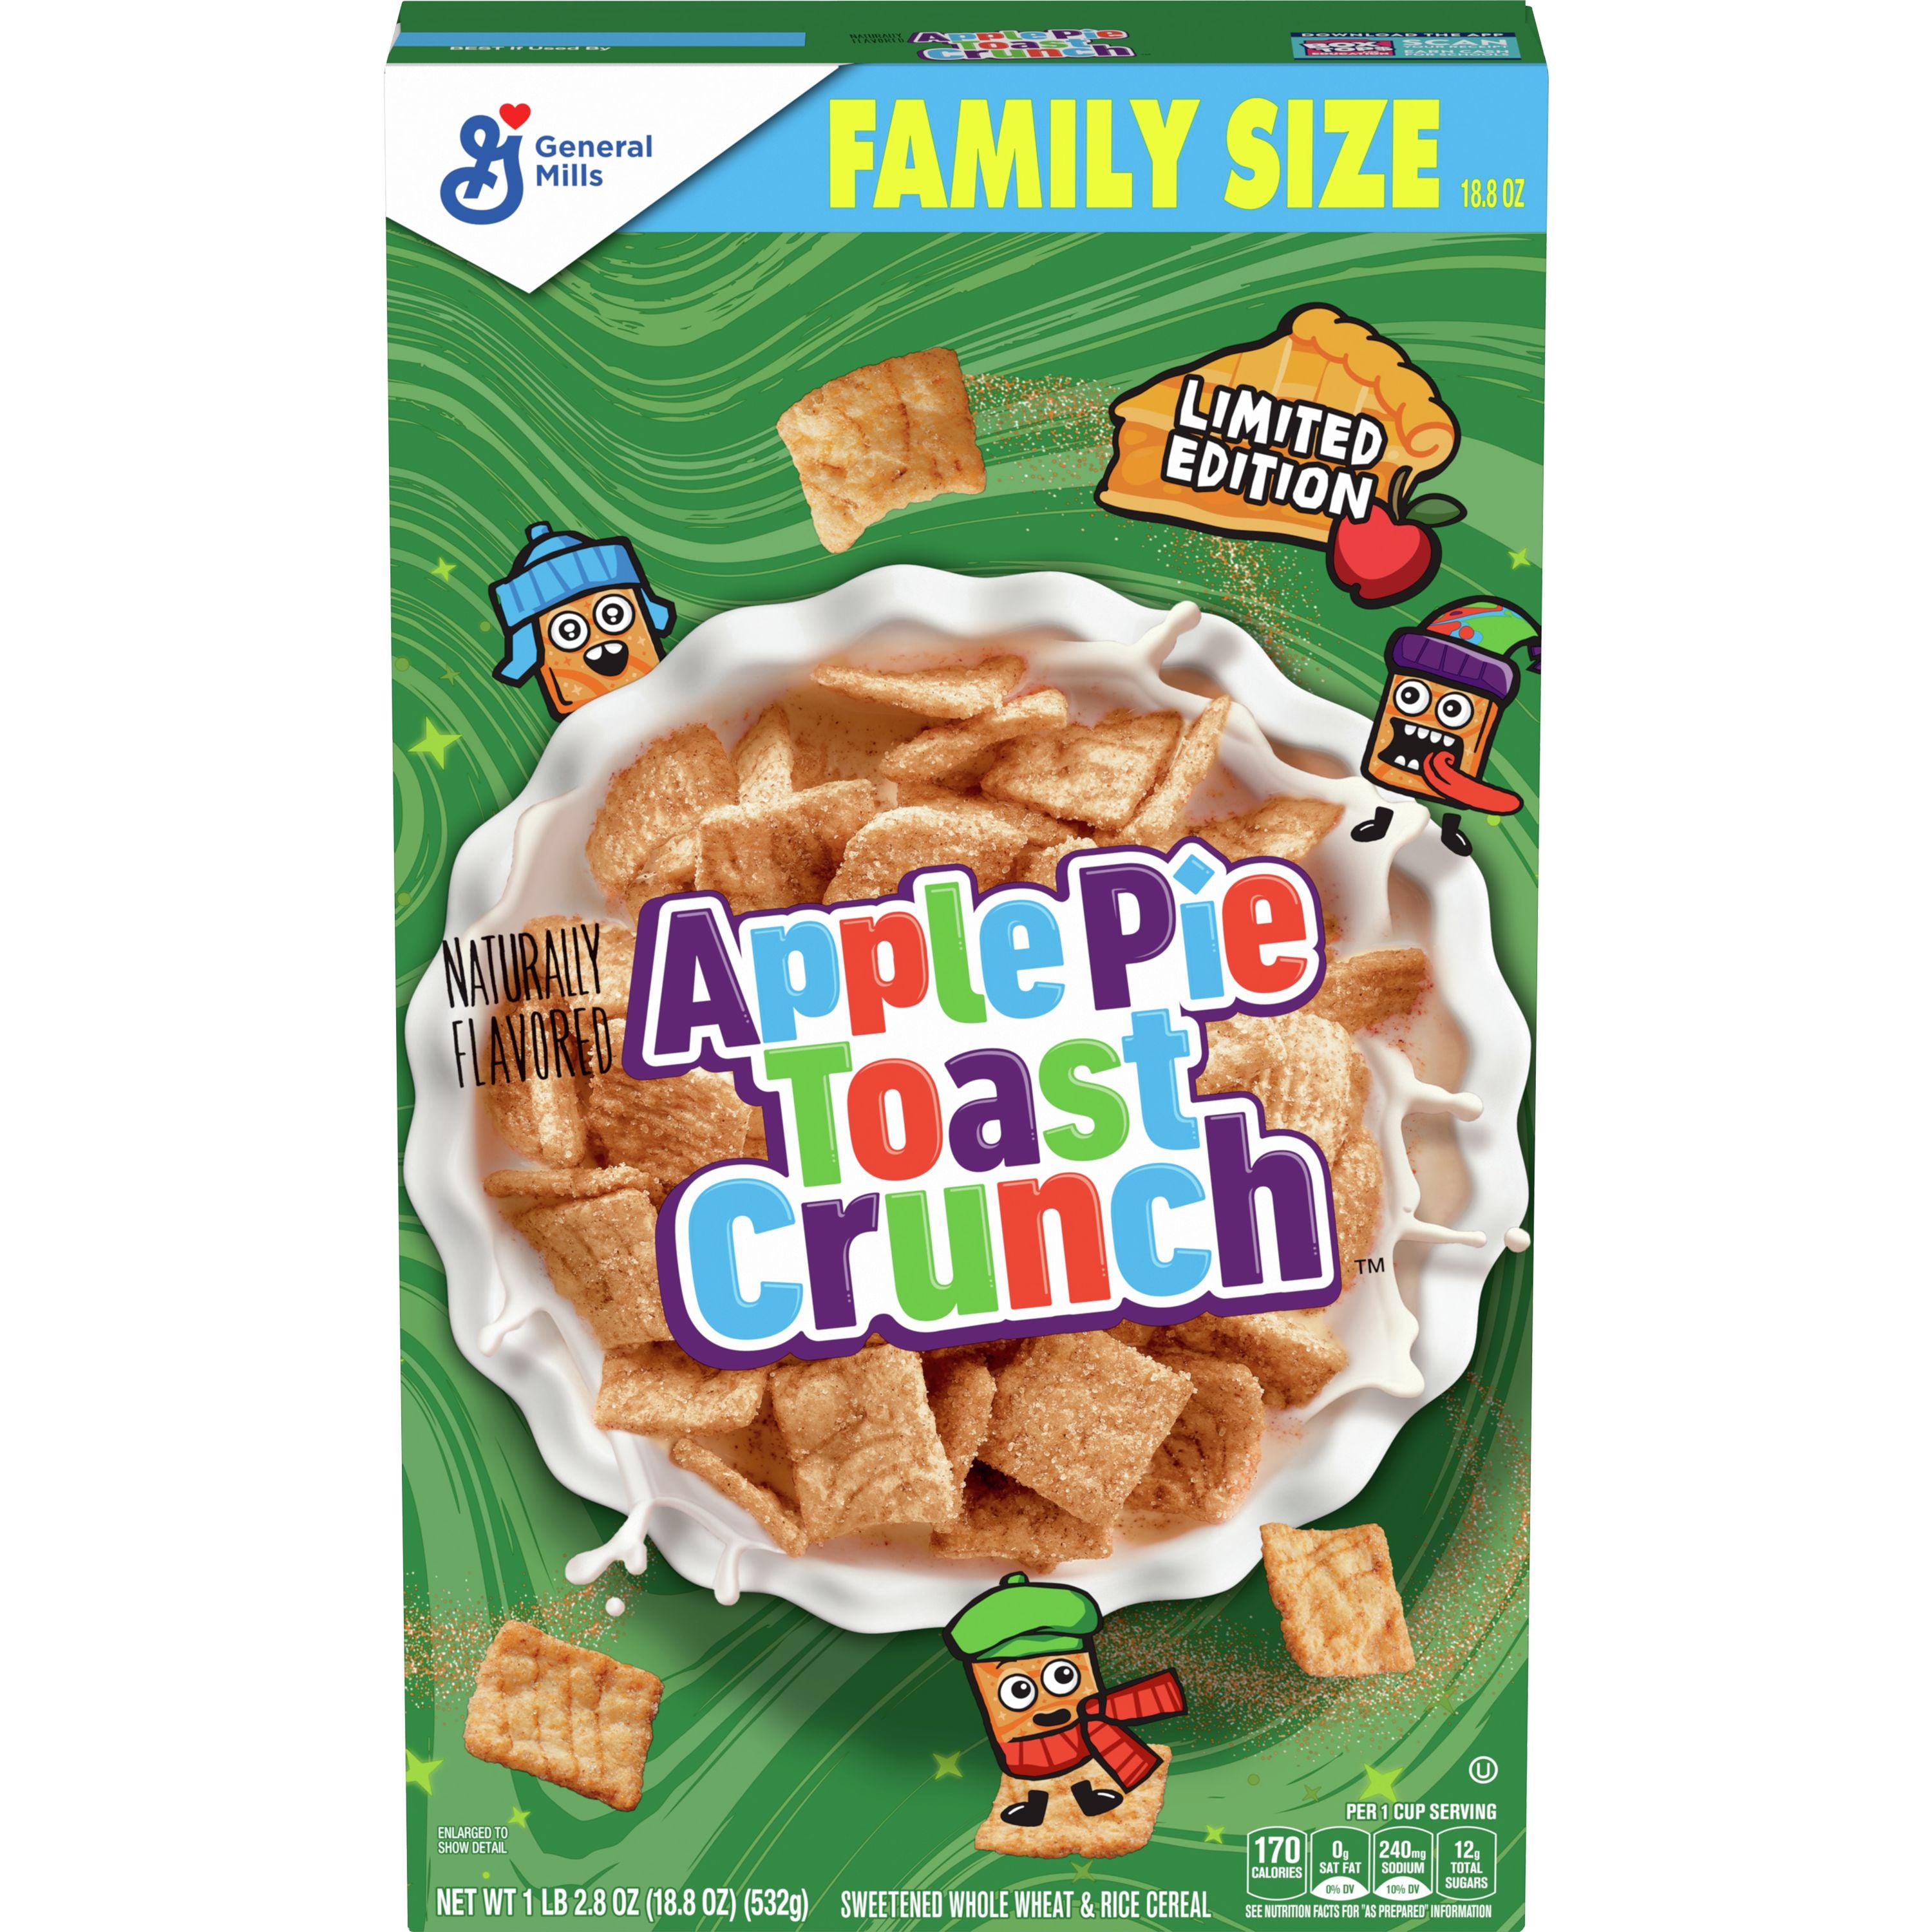 Apple Pie Toast Crunch Cereal